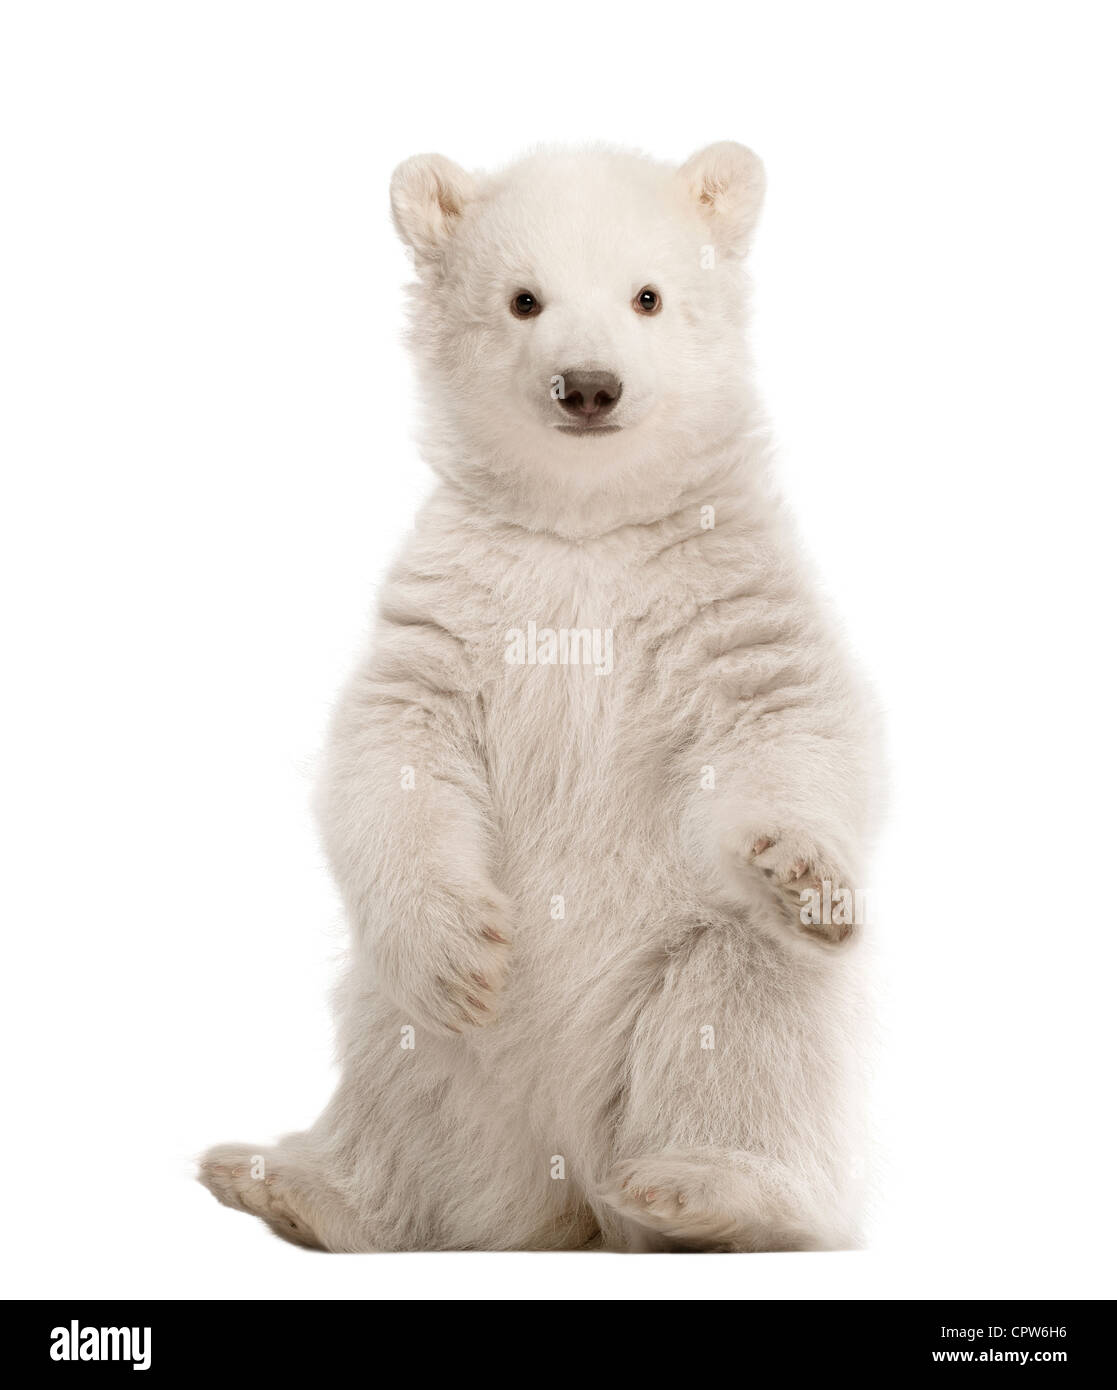 Polar bear cub,  Ursus maritimus, 3 months old, portrait against white background Stock Photo